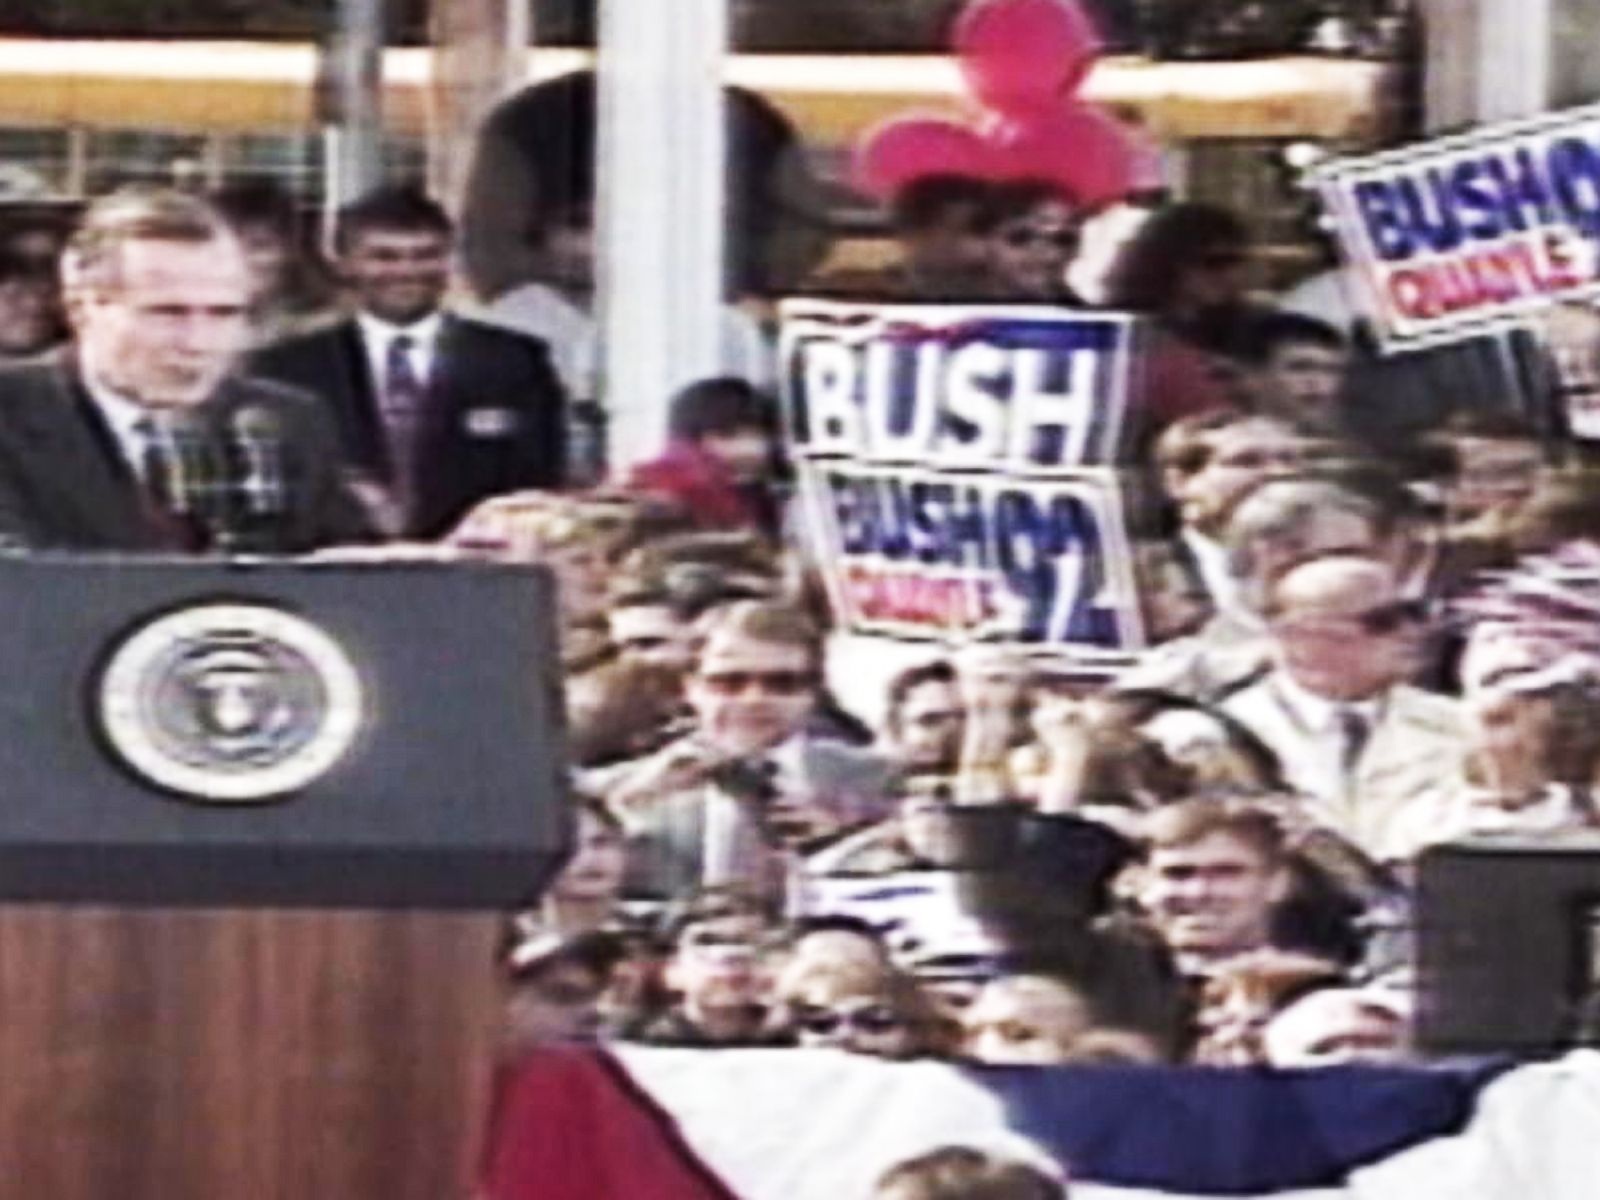 1992 - 6 Days: Bush Taps Star Power Against Clinton